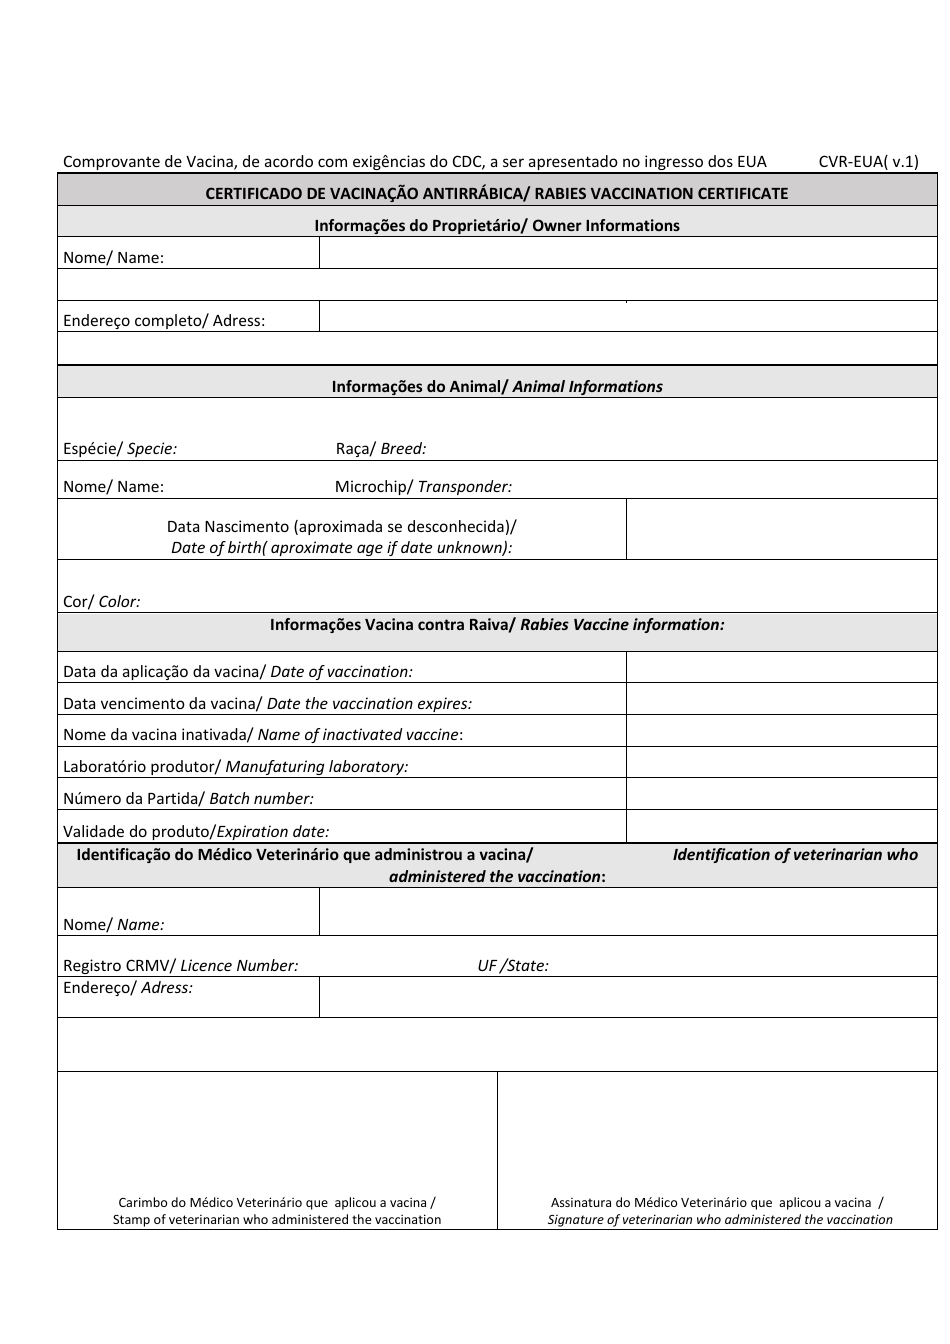 Form CVR-EUA Rabies Vaccination Certificate - Brazil (English / Portuguese), Page 1